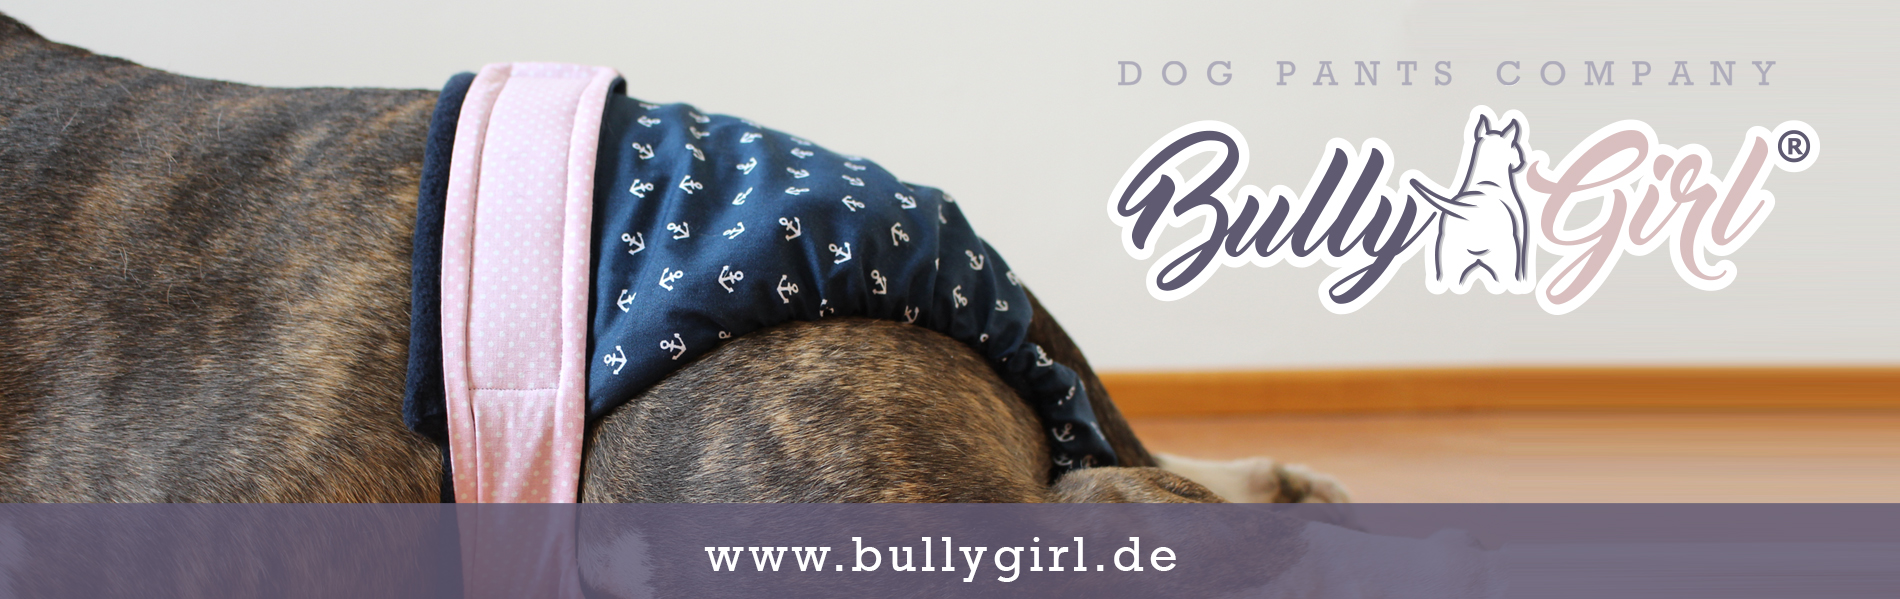 Bully Girl // DOG PANTS COMPANY